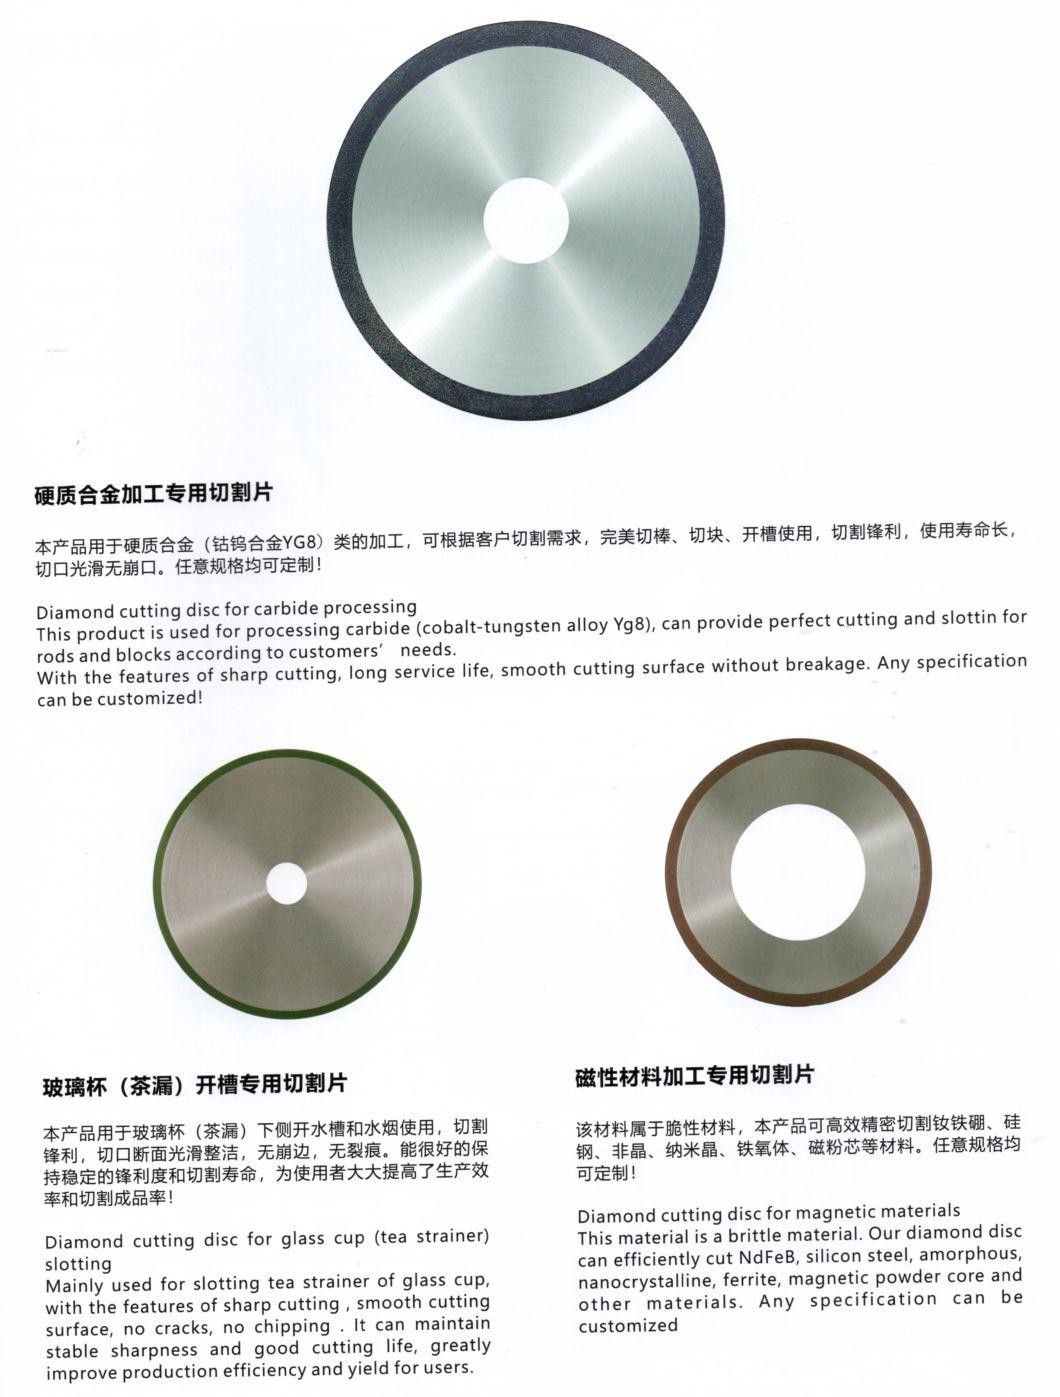 Resin Bonded Ultrathin Diamond Cutting Disc for Quartz Crucible